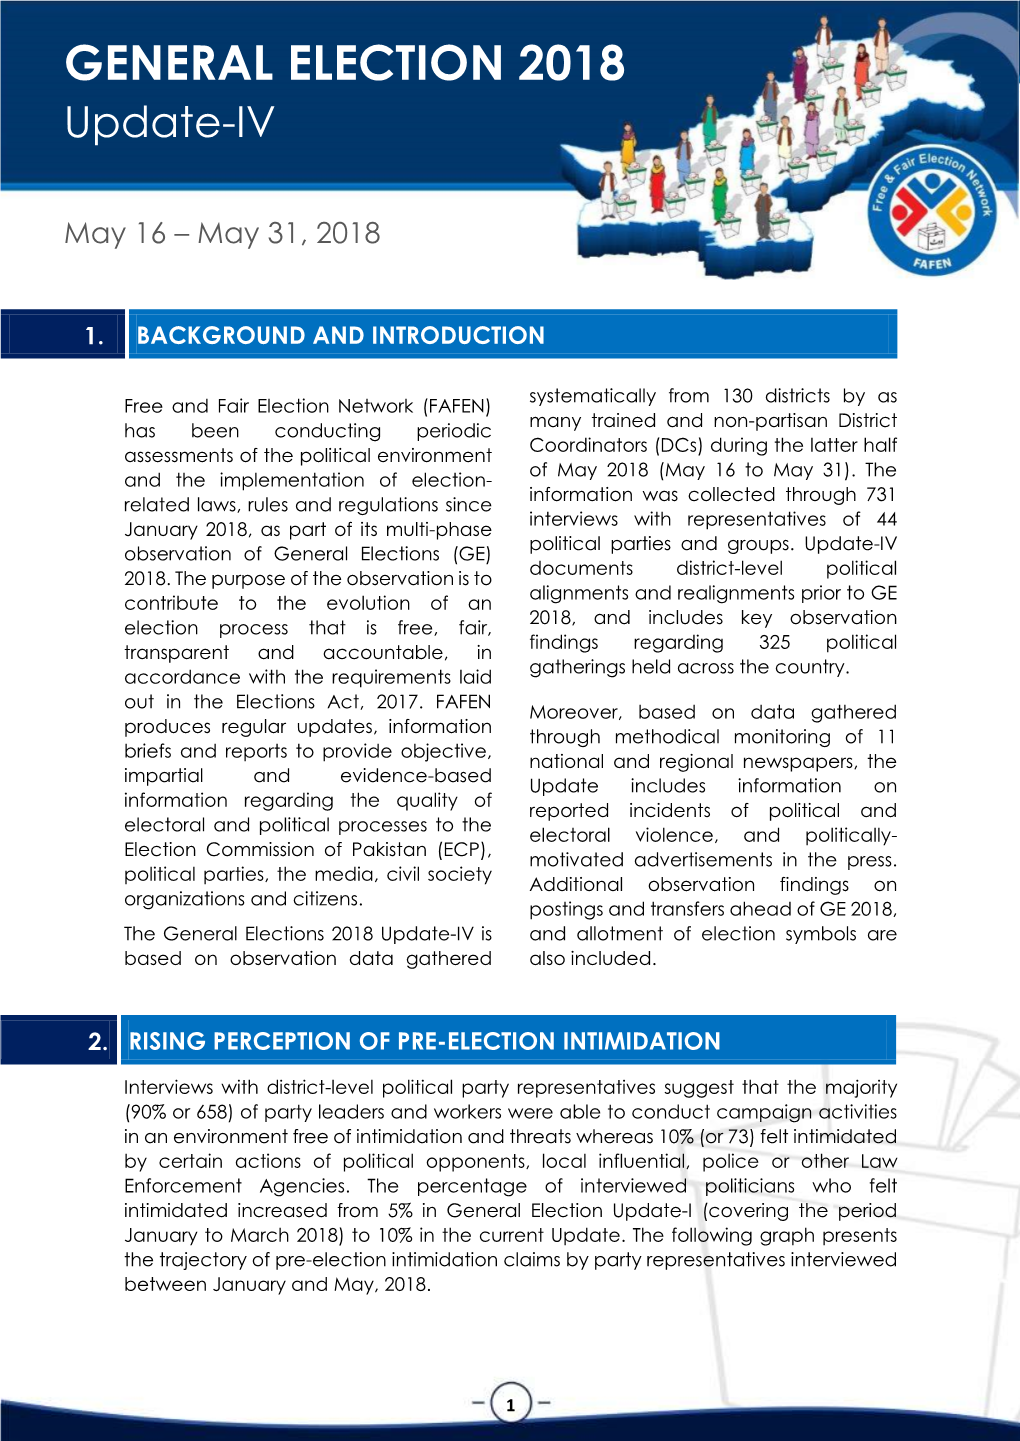 GENERAL ELECTION 2018 UPDATE-IV - FAFEN GENERAL ELECTION 2018 Update-IV